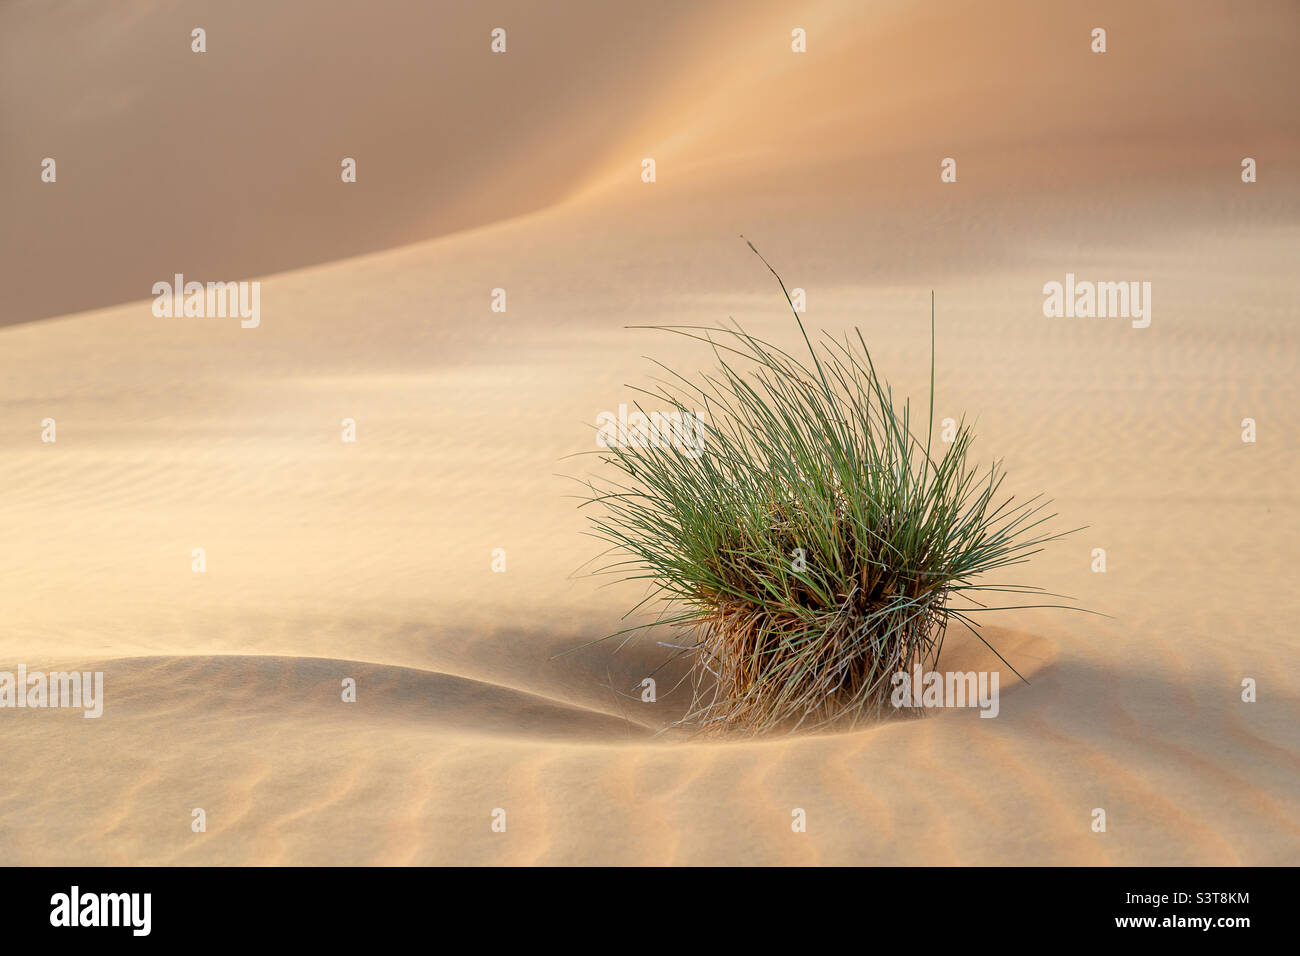 Desert shrub hidden between the sand dunes. Beautiful natural landscape scene. Stock Photo